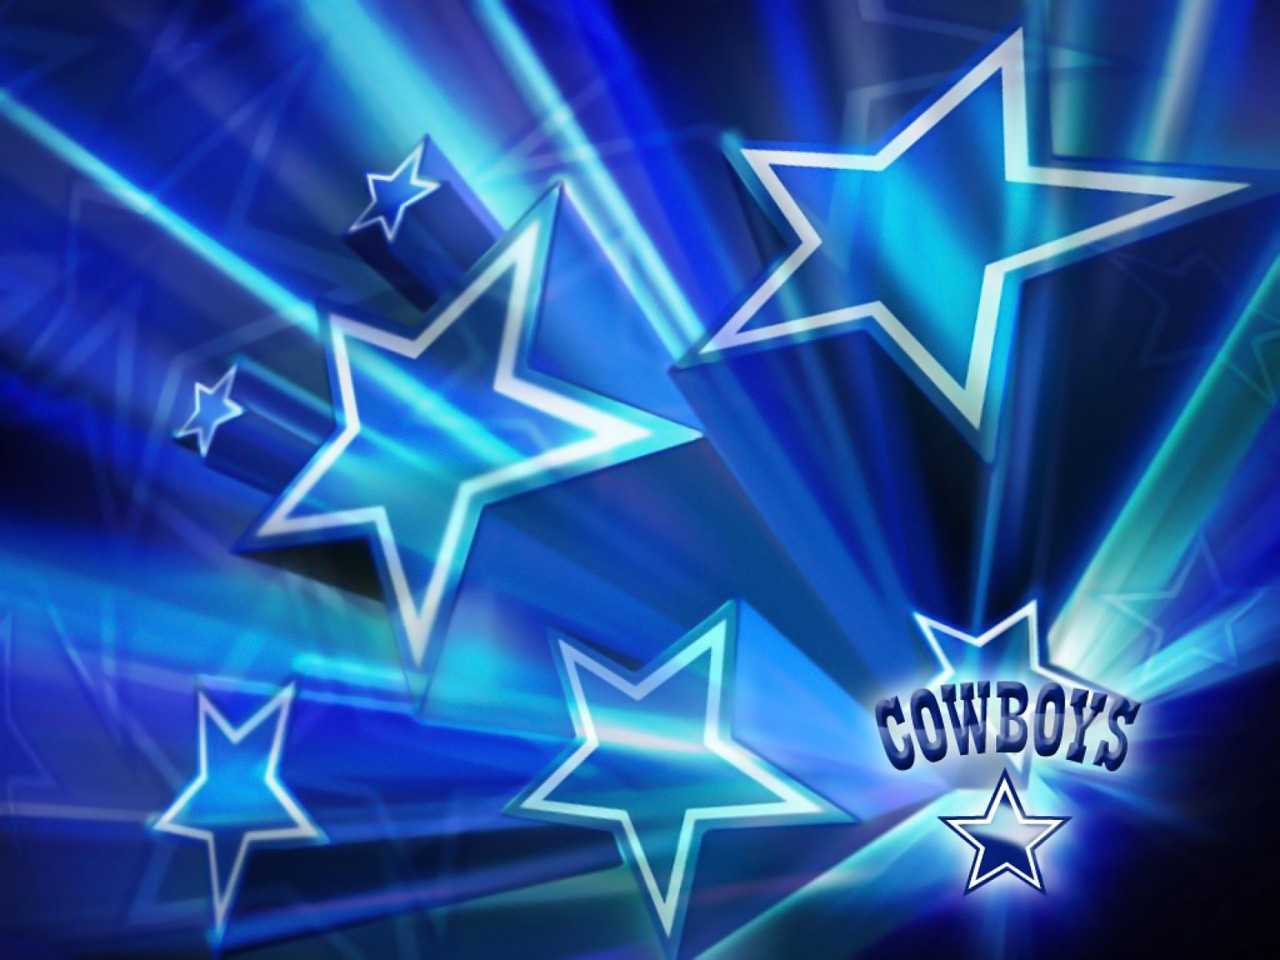 New Dallas Cowboys wallpaper background Dallas Cowboys wallpapers